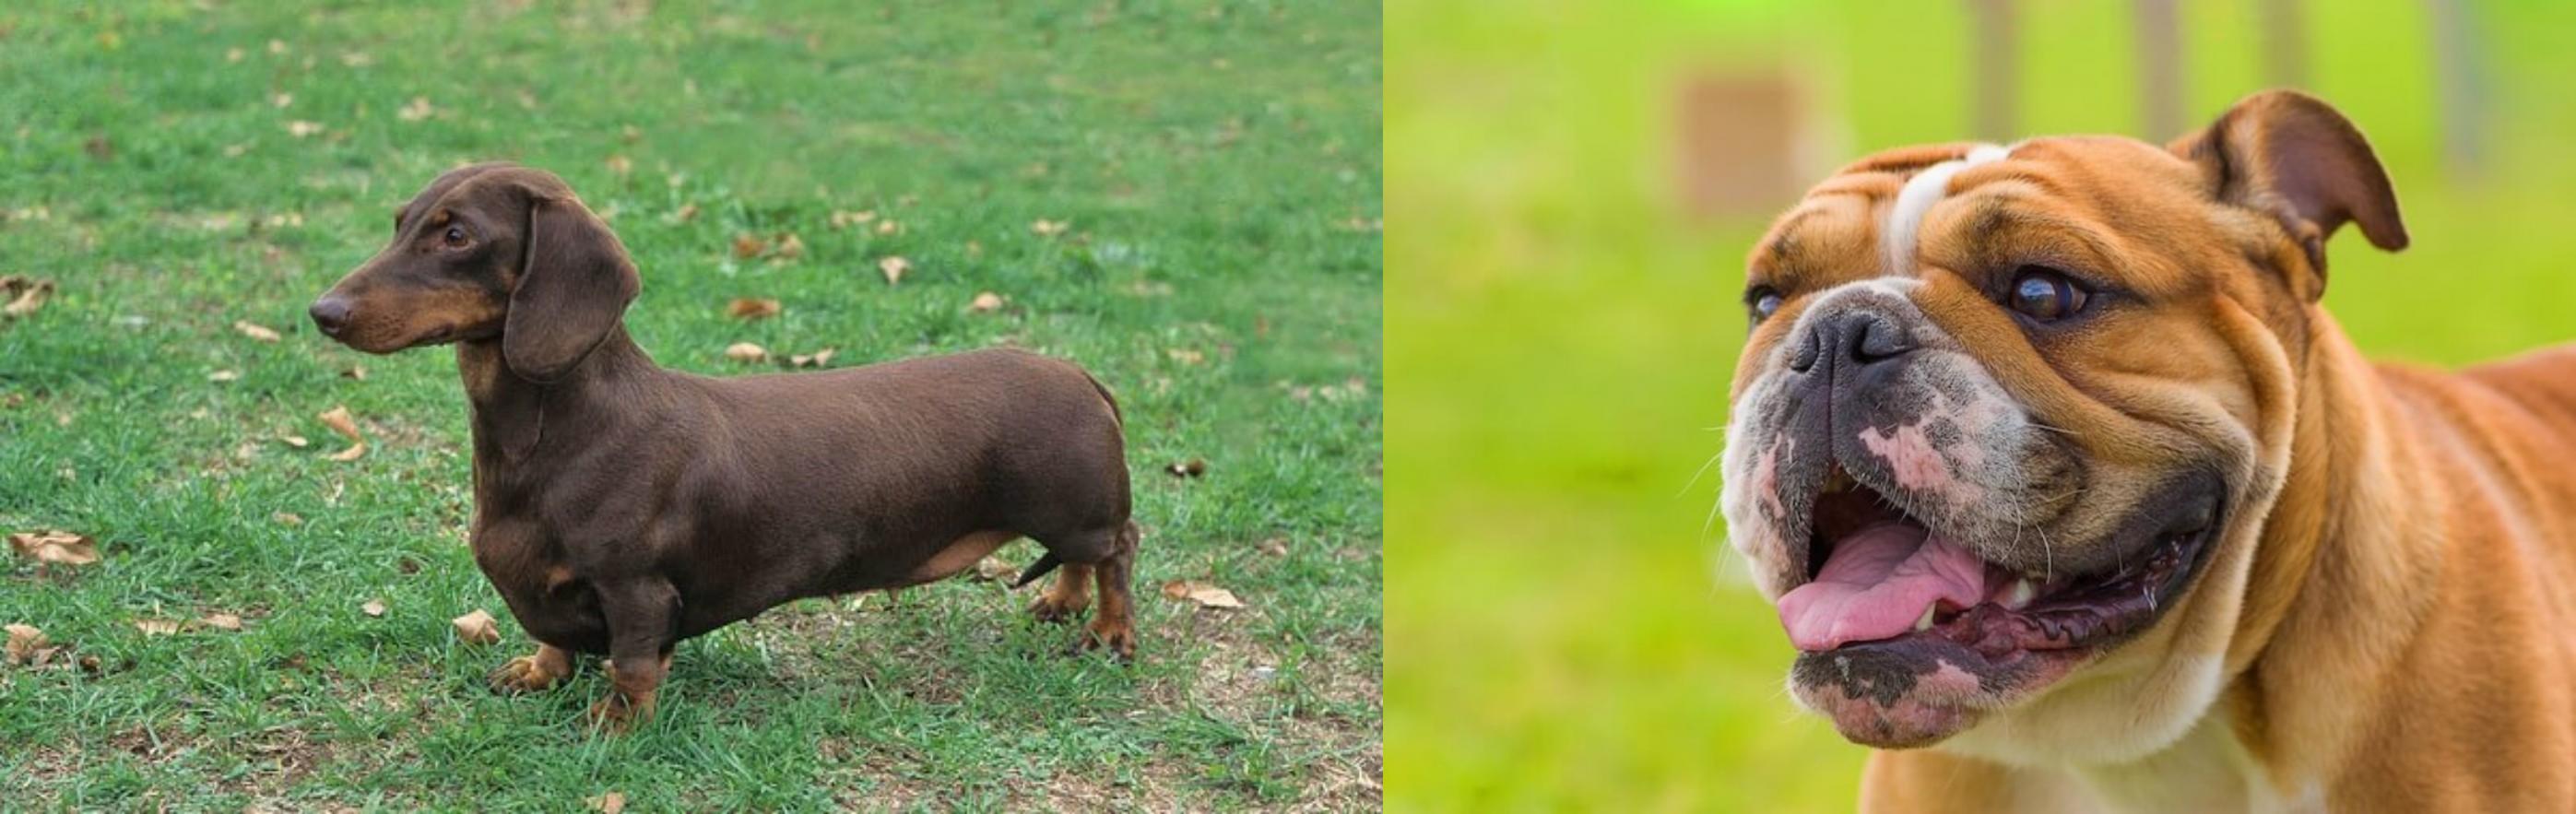 Miniature English Bulldog vs Dachshund Breed Comparison